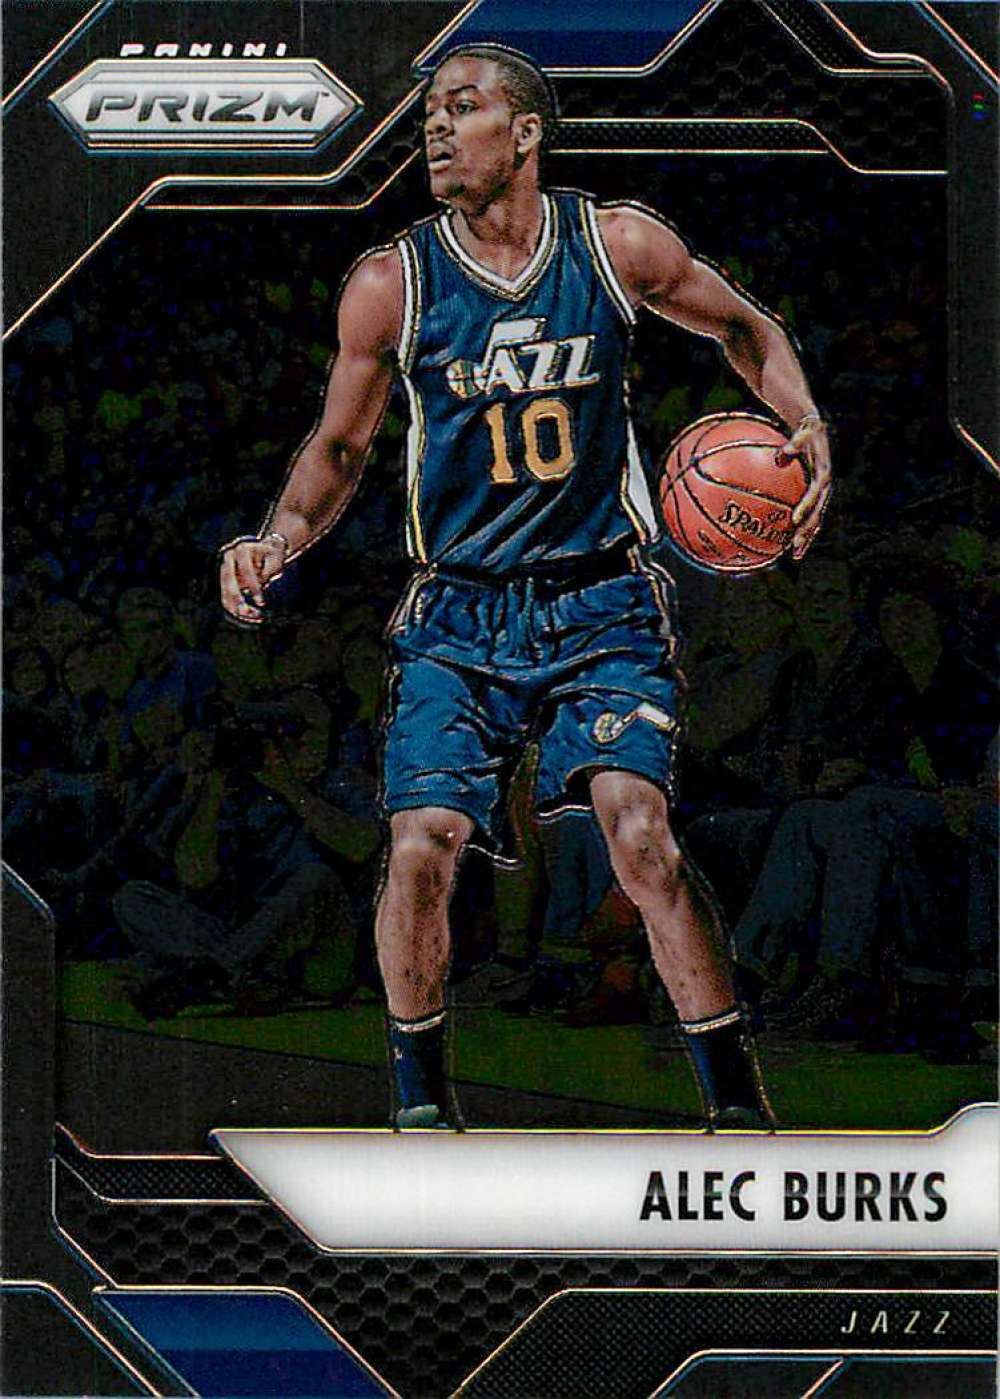 2016-17 Panini Prizm Basketball #109 Alec Burks Utah Jazz Official NBA Trading Card